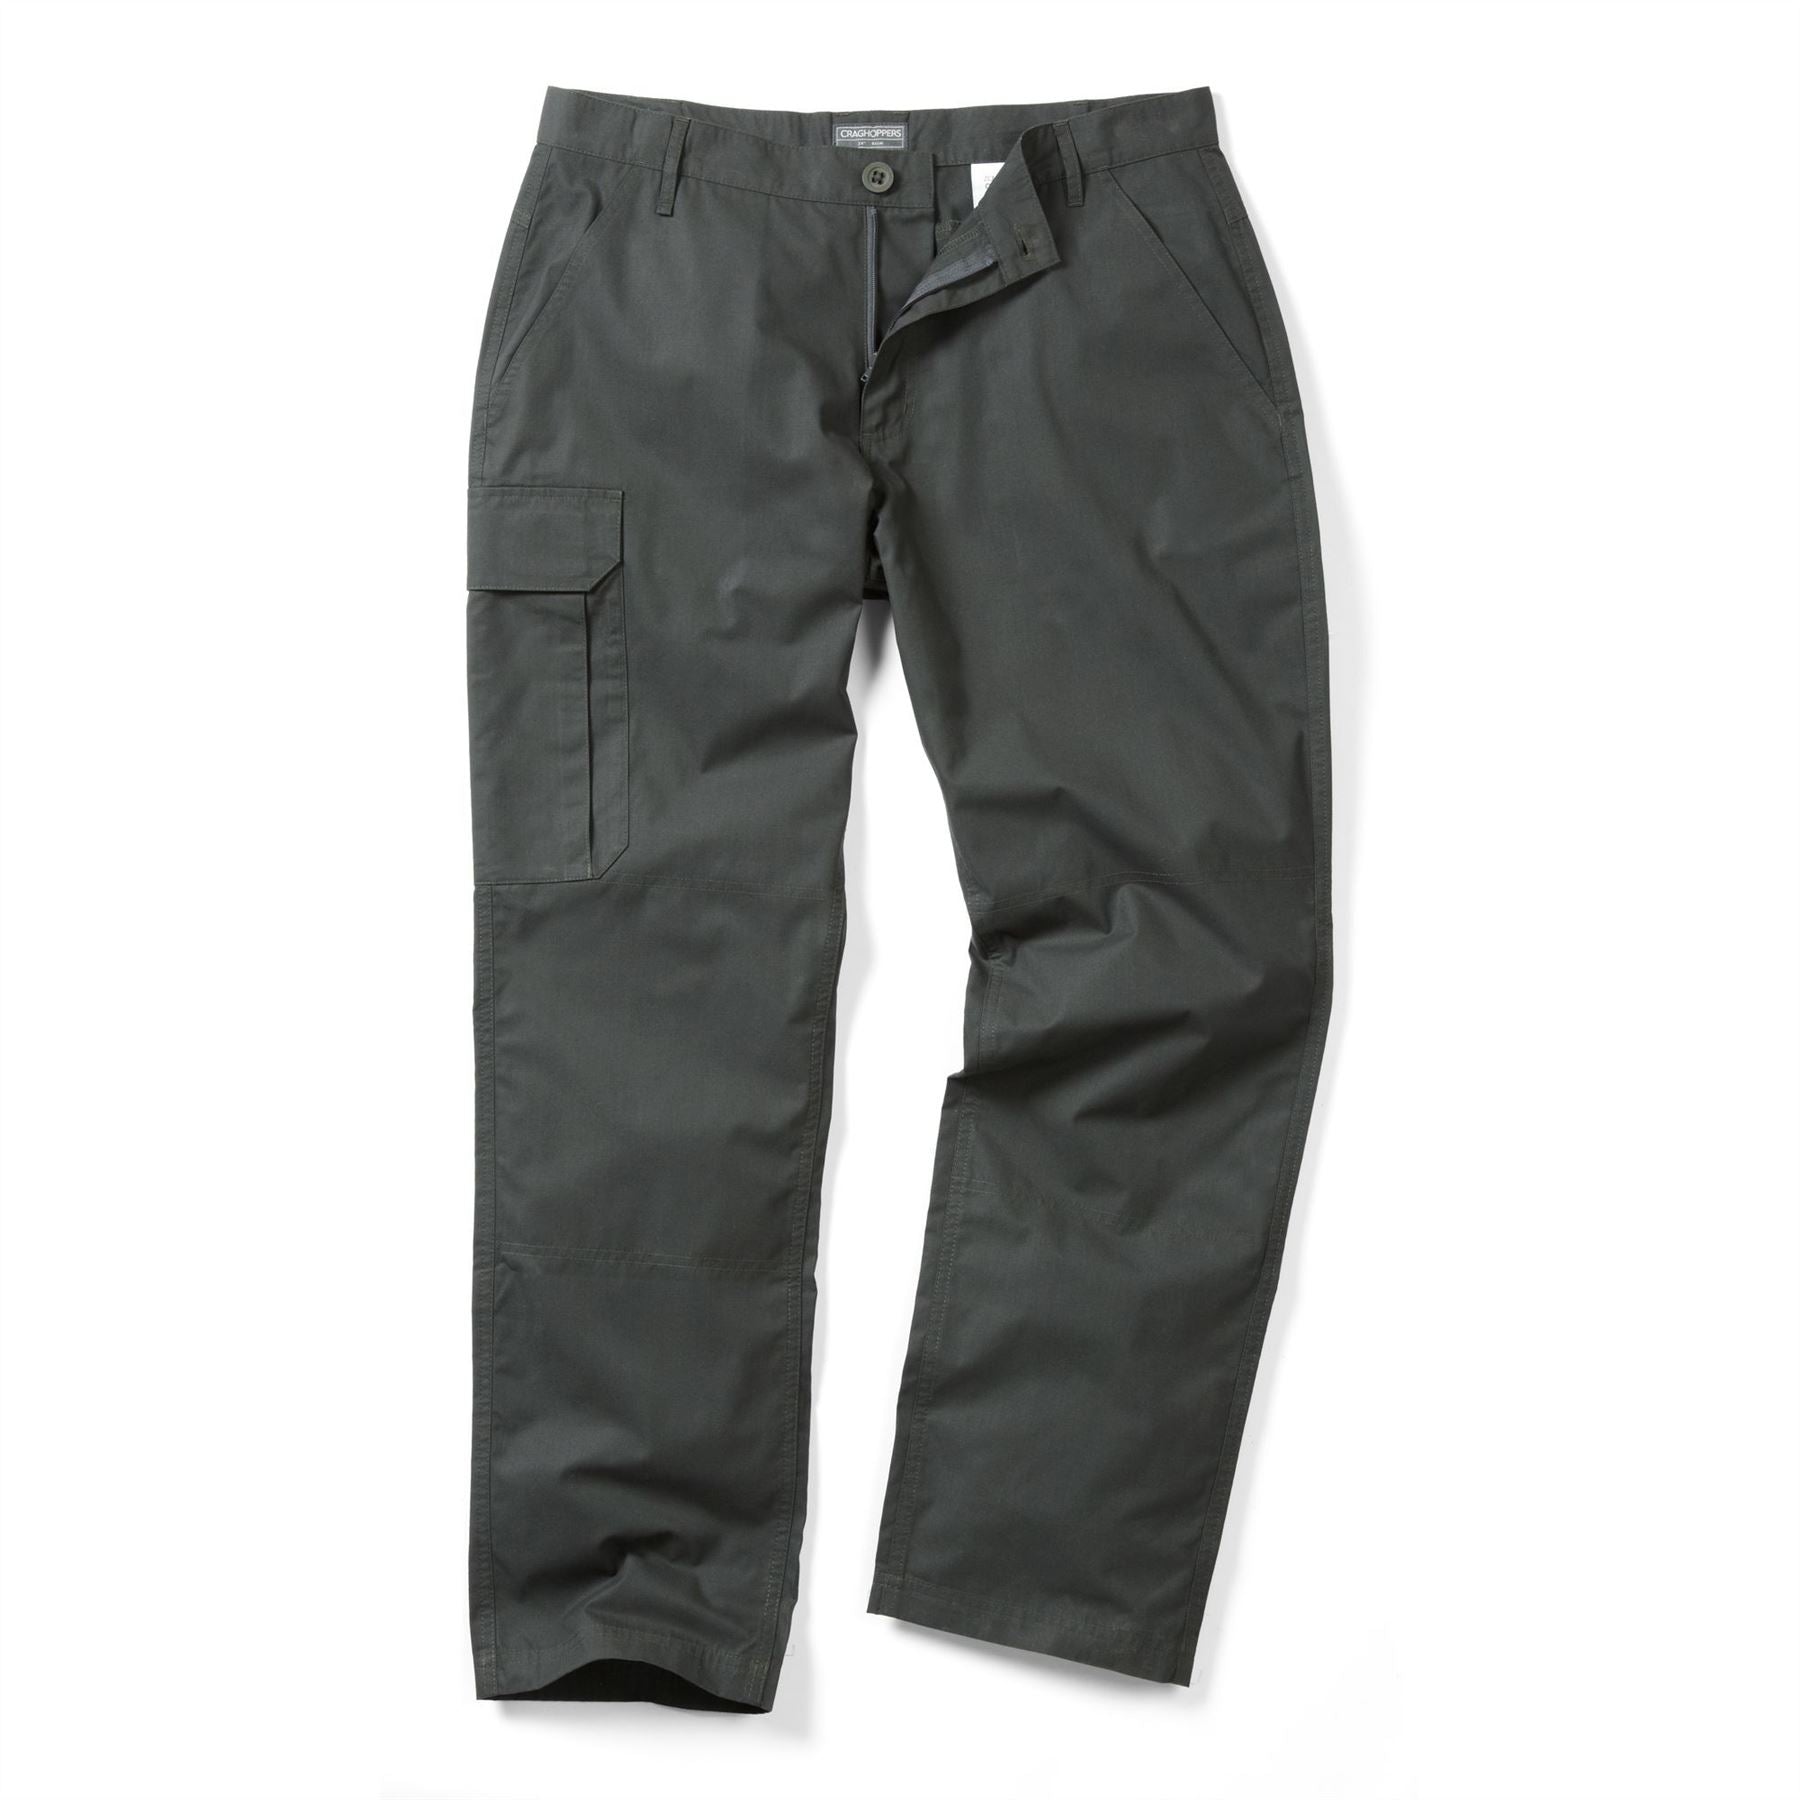 Duluth Work Pants|tacvasen Men's Summer Quick Dry Cargo Pants - Lightweight  Nylon Hiking Trousers